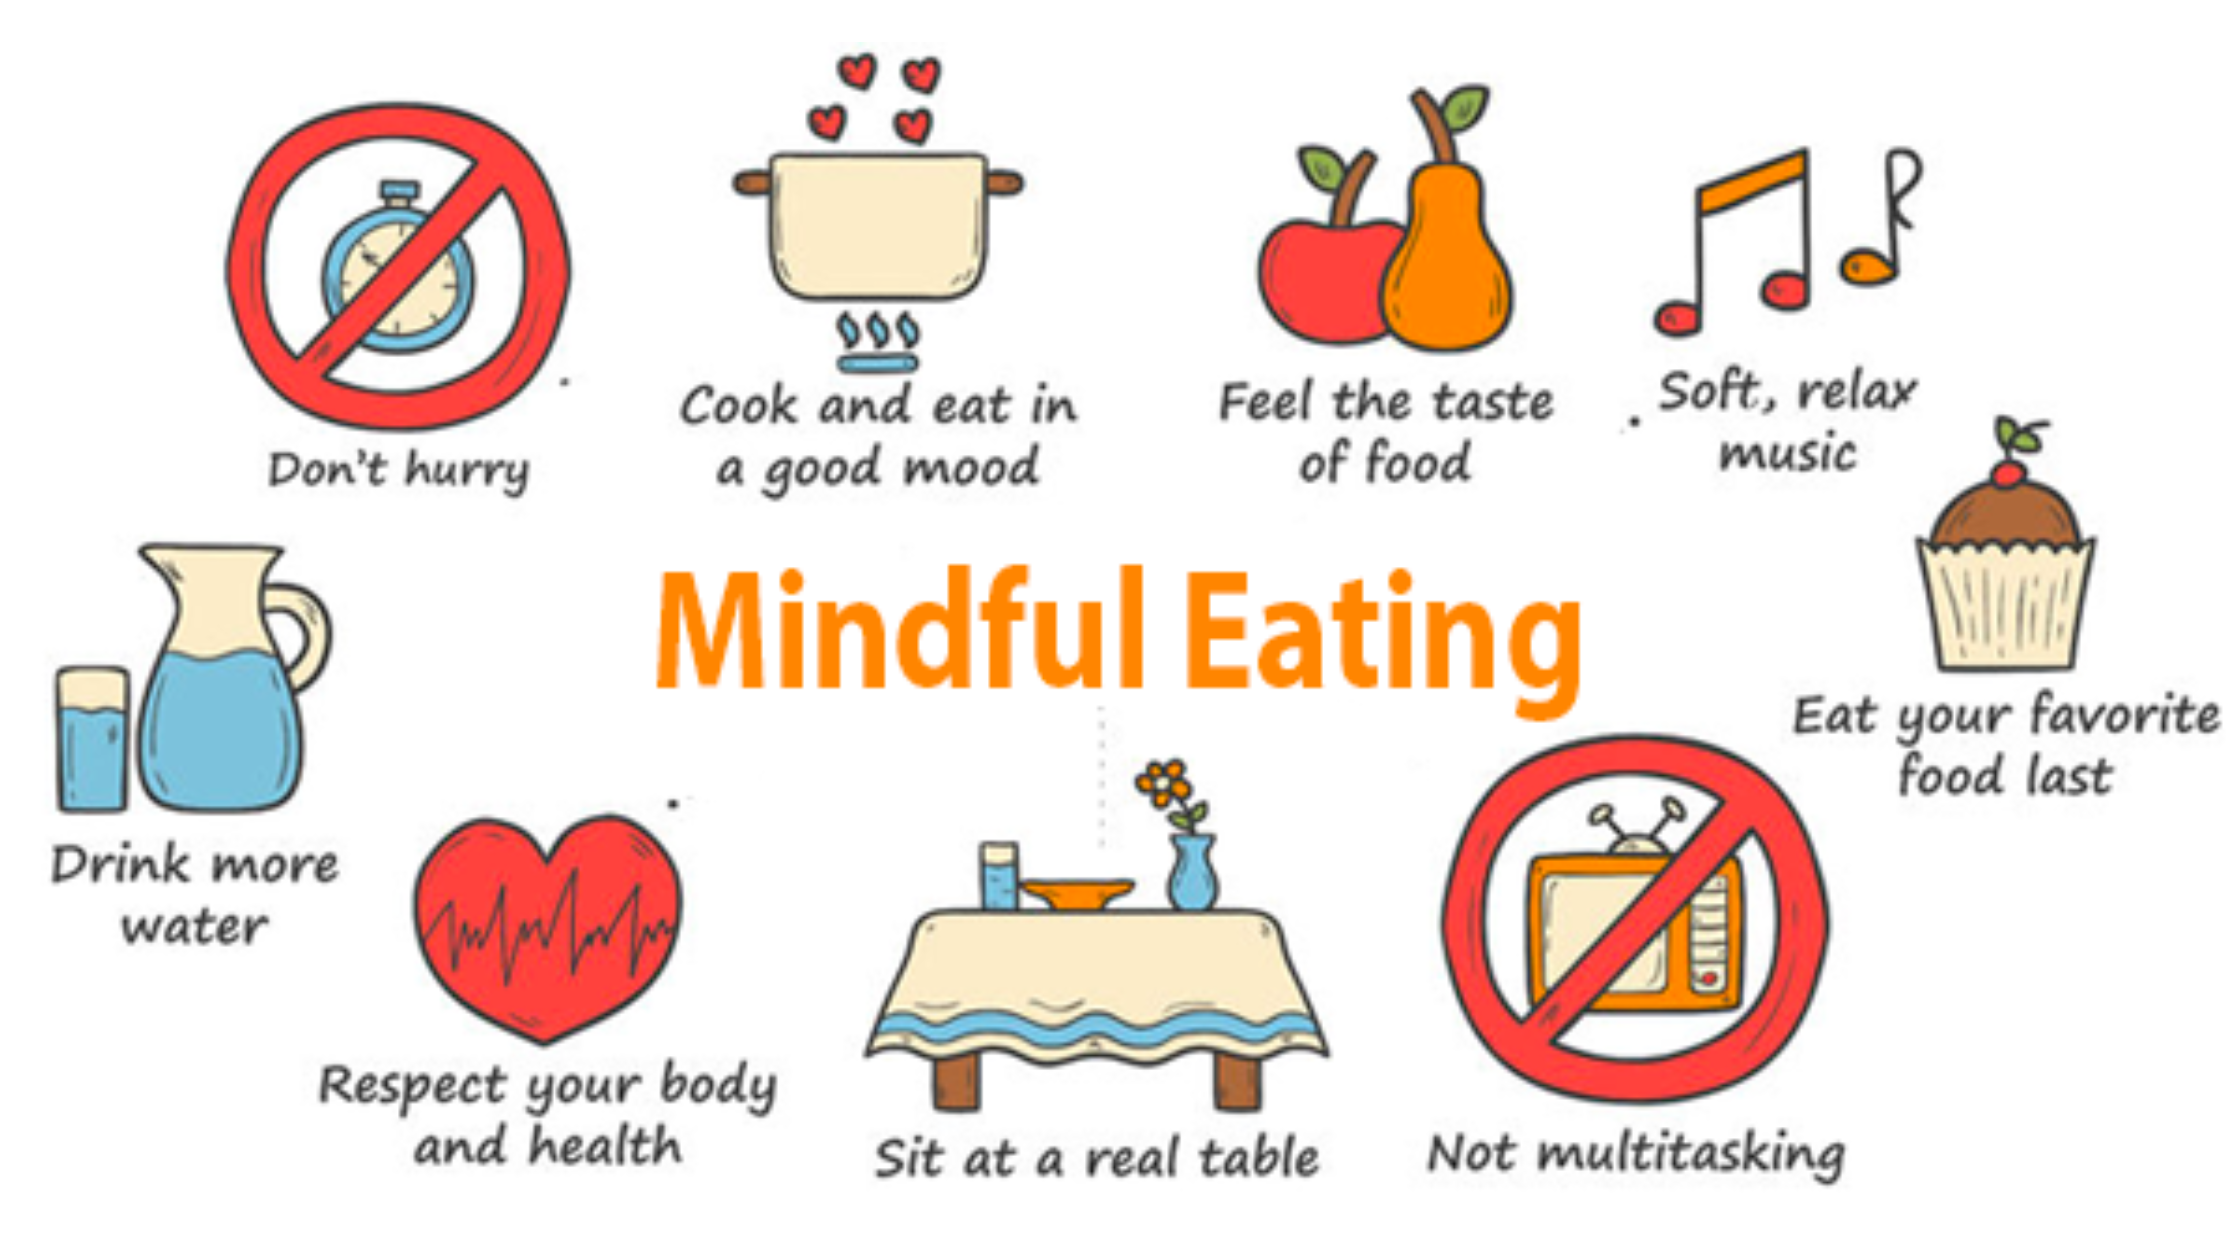 Mindful eating